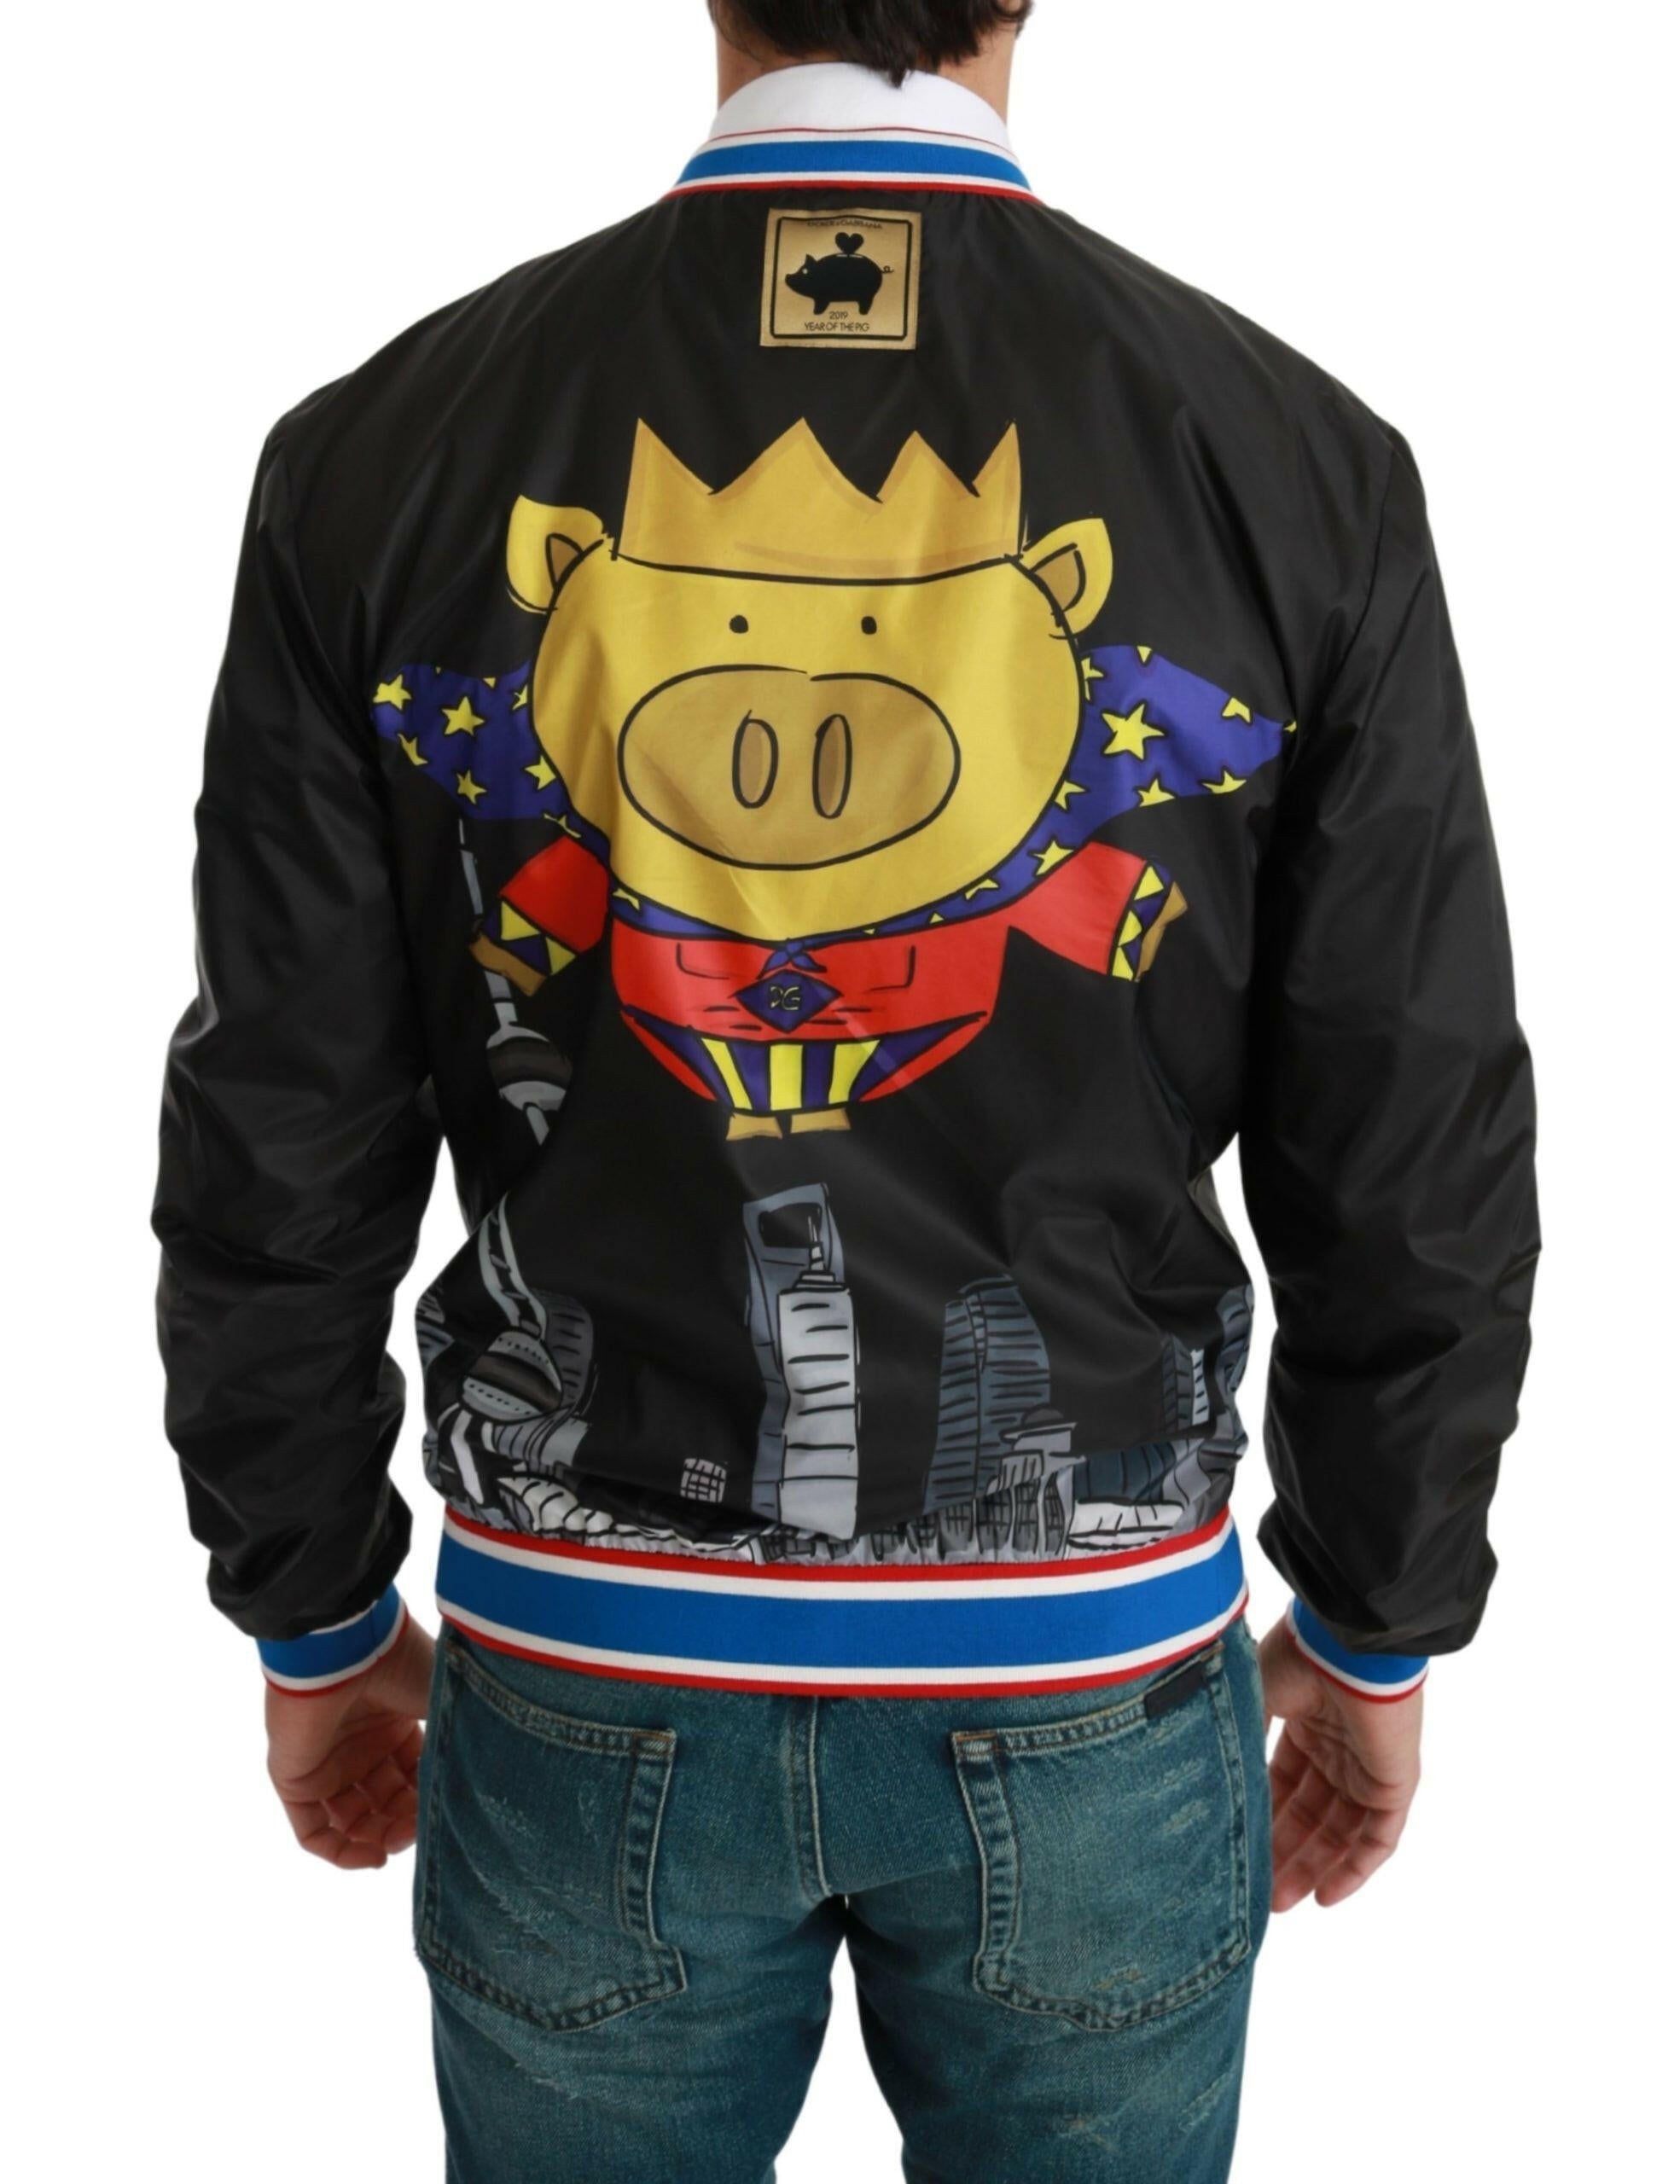 Dolce & Gabbana Black YEAR OF THE PIG Bomber Jacket - GENUINE AUTHENTIC BRAND LLC  